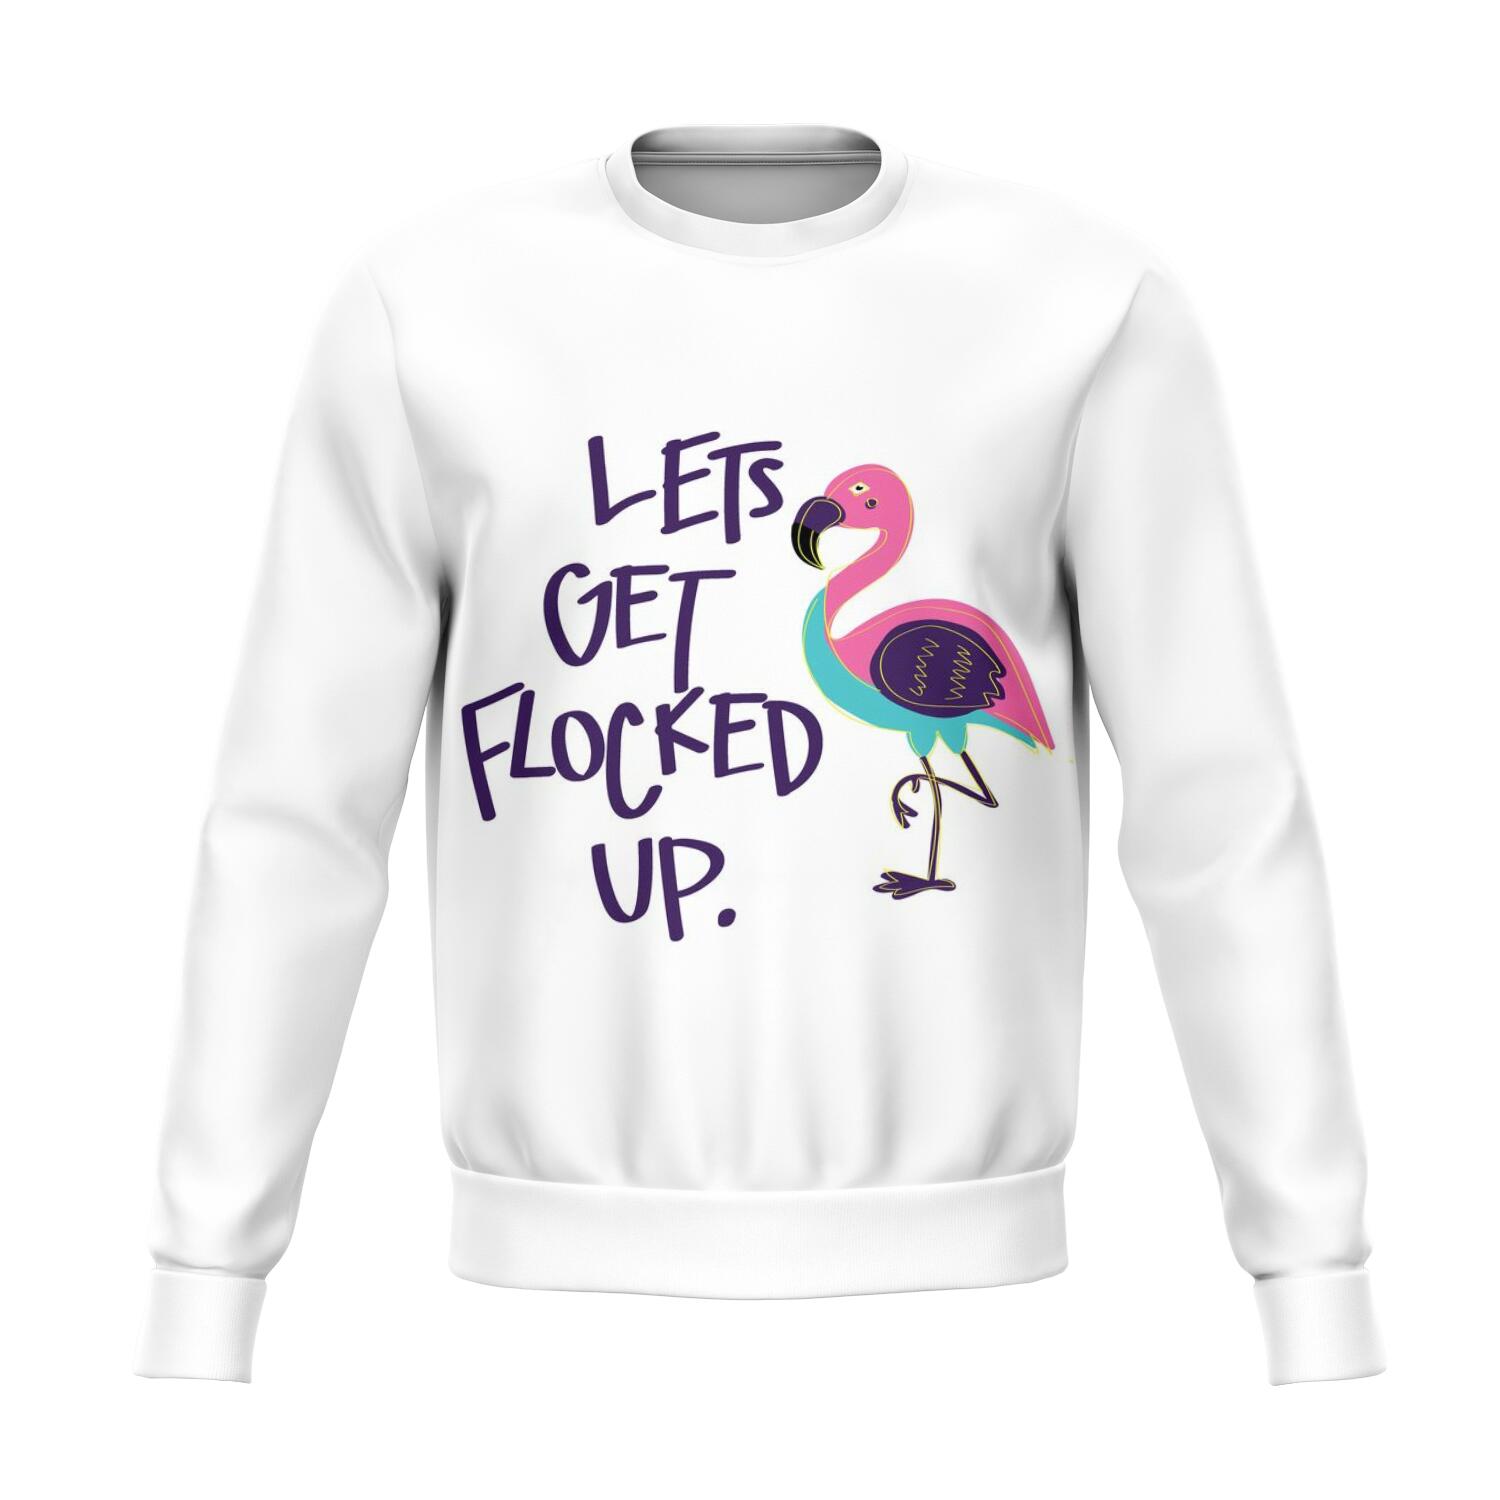 Let's Get Flocked Up Sweatshirt